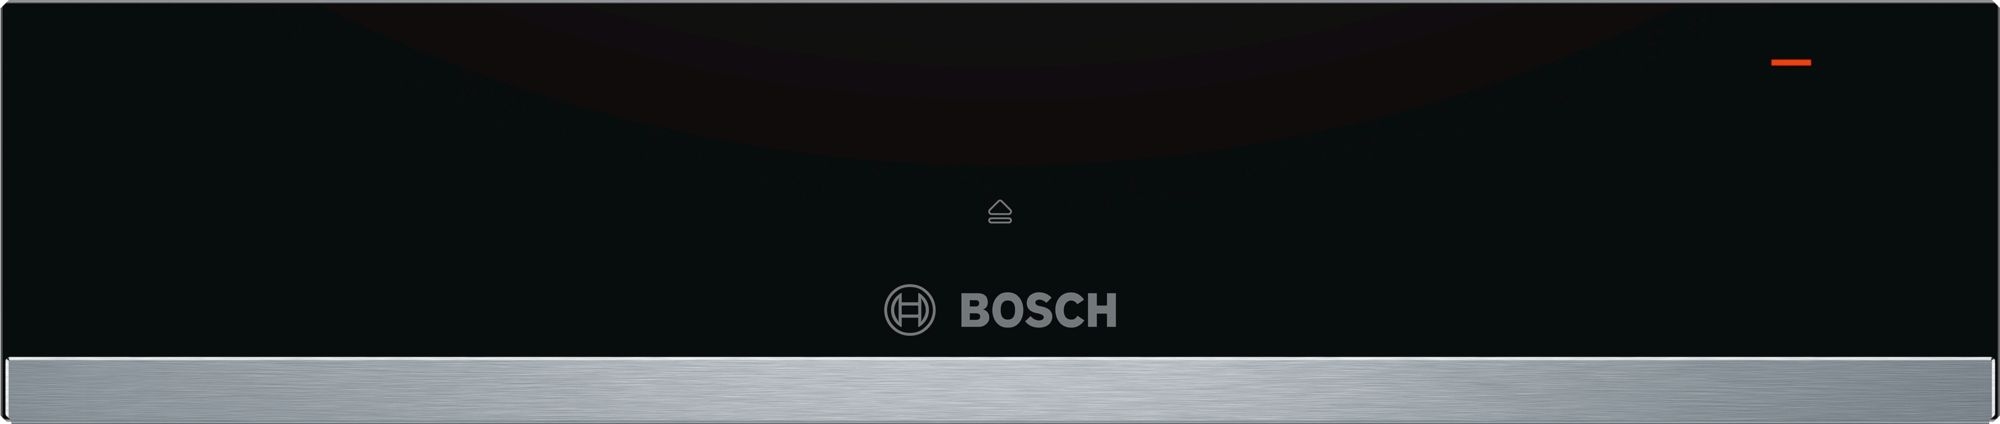 Bosch BIC510NS0B 14cm Built In Warming Drawer-Stainless Steel